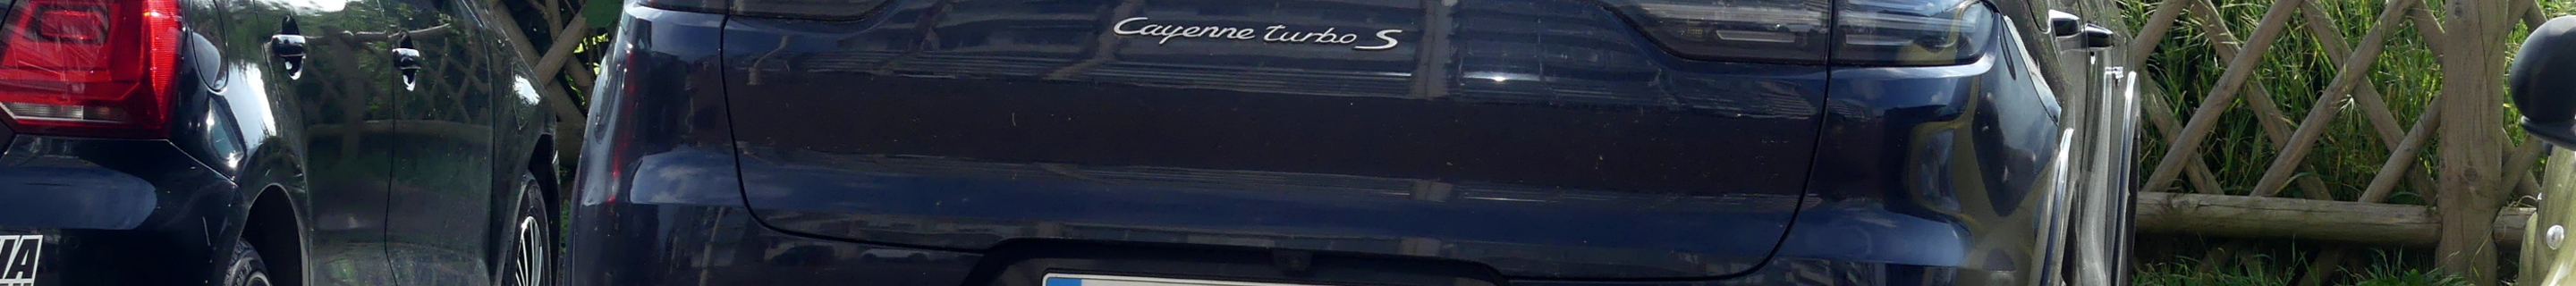 Porsche Cayenne Coupé Turbo S E-Hybrid